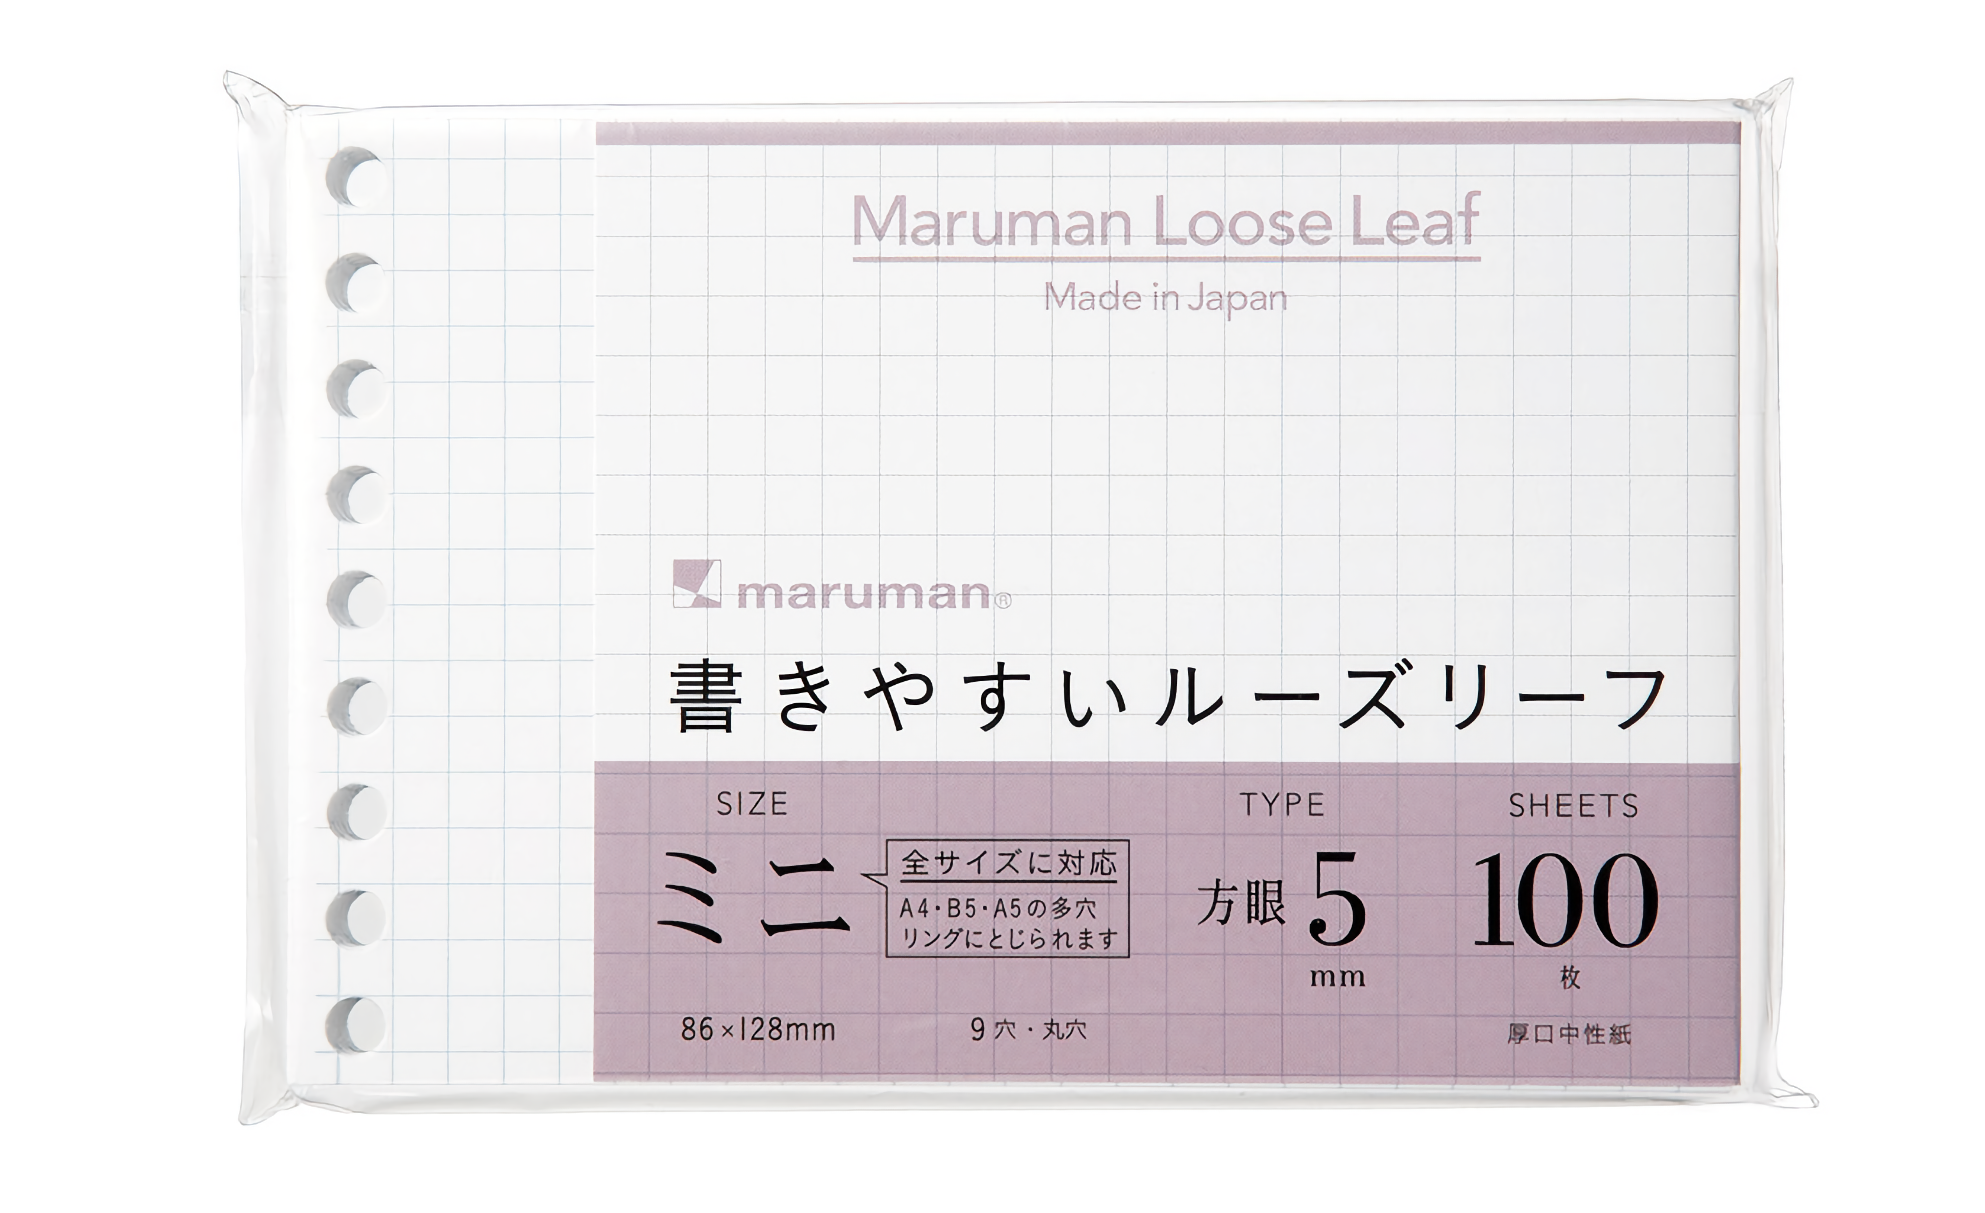 Maruman Loose Leaf Easy to Write Rutad 5 mm